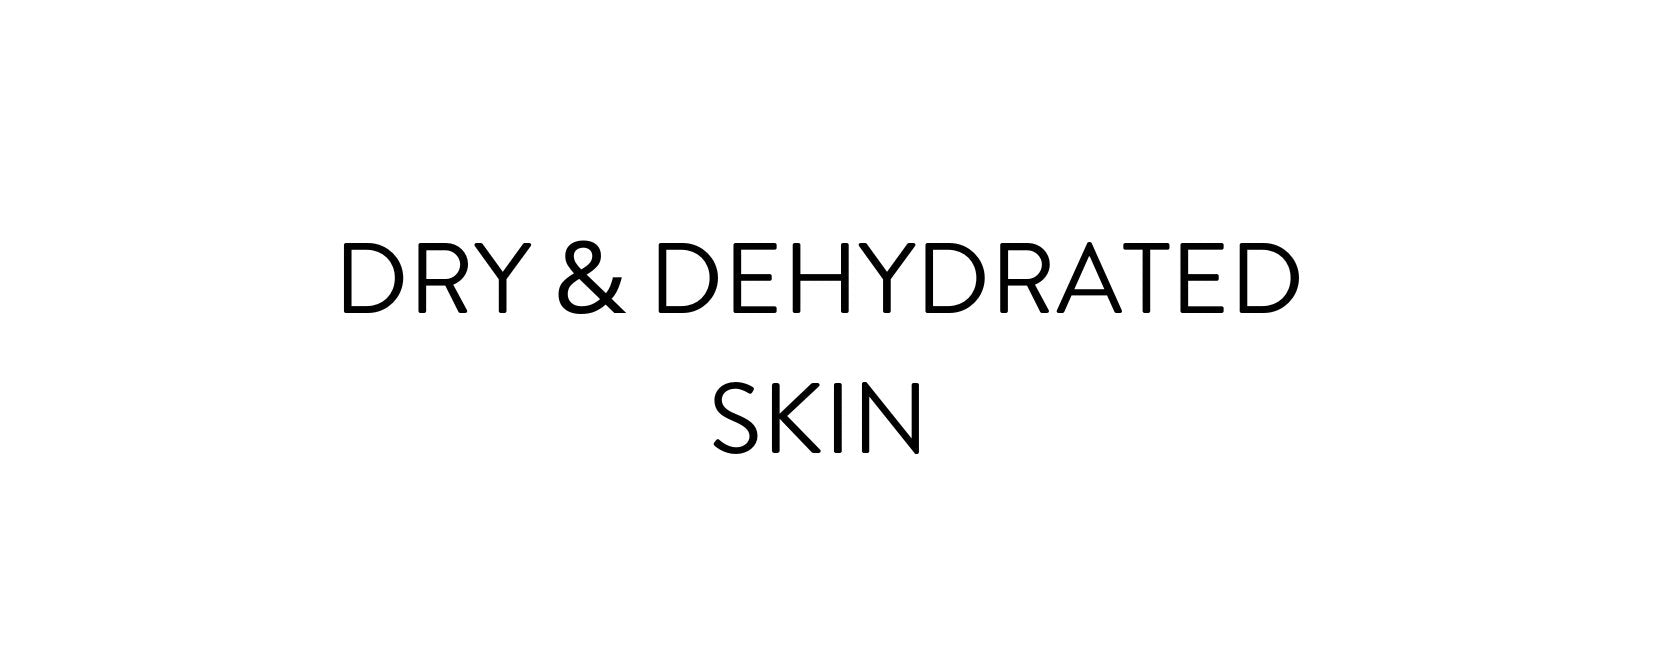 Dry & Dehydrated Skin